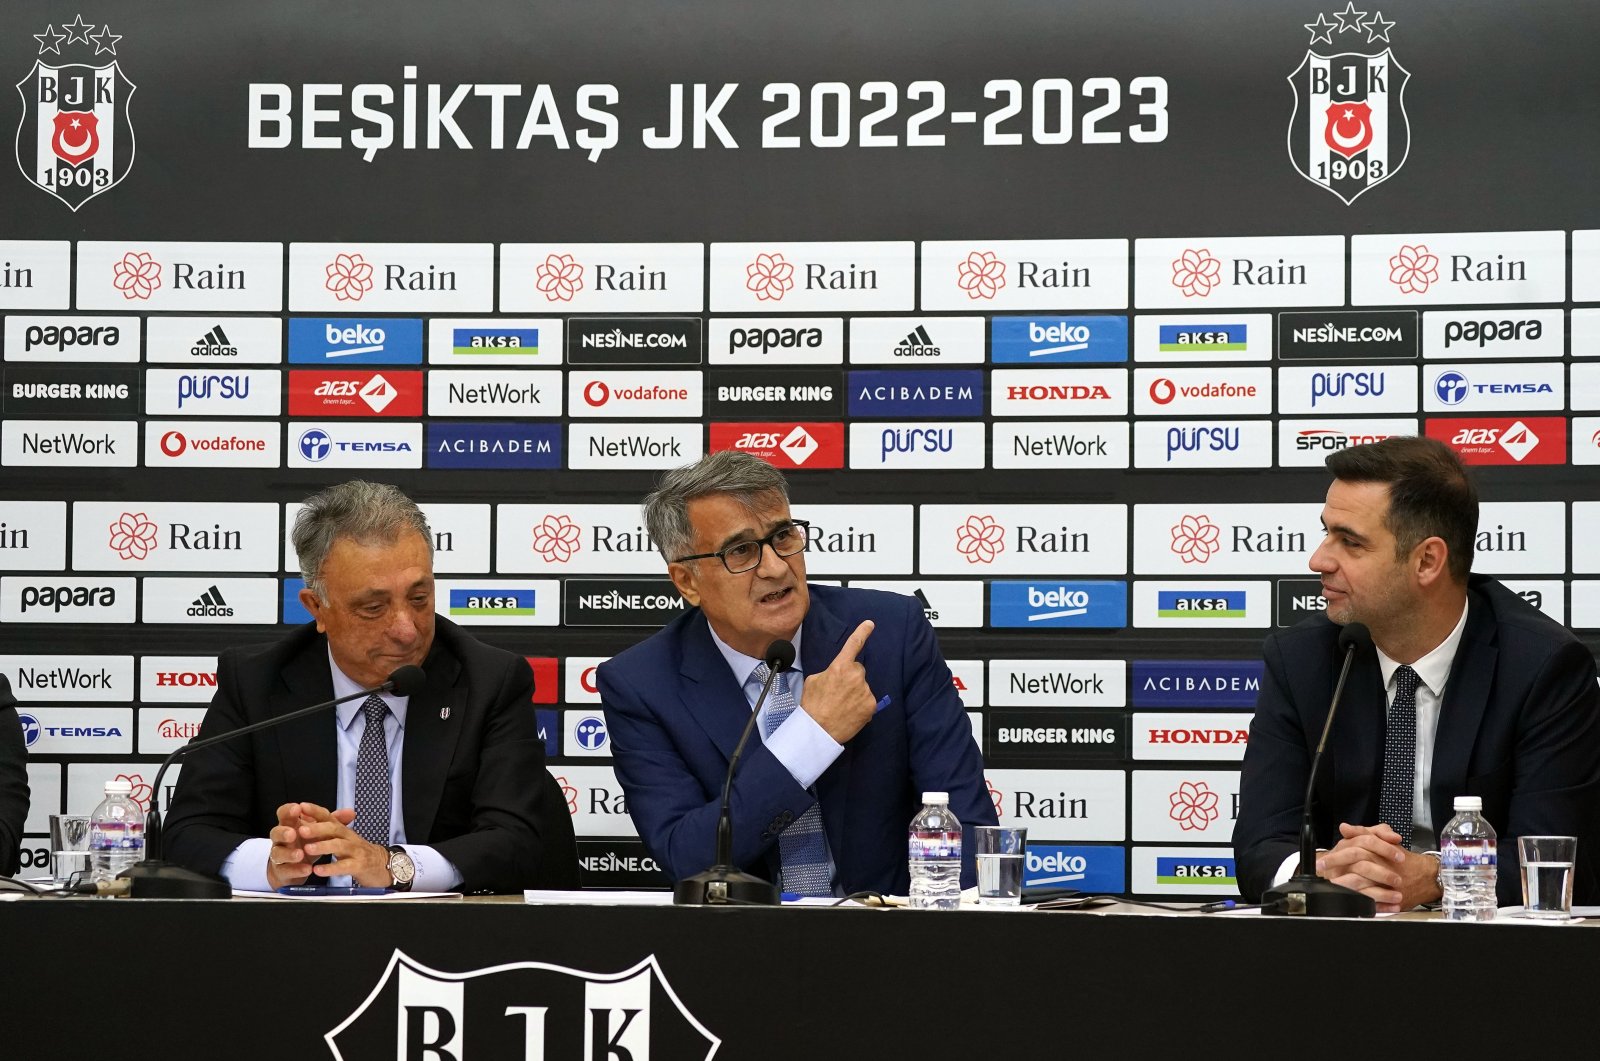 Beşiktaş mengkonfirmasi penunjukan mantan manajer enol Güneş sebagai pelatih kepala